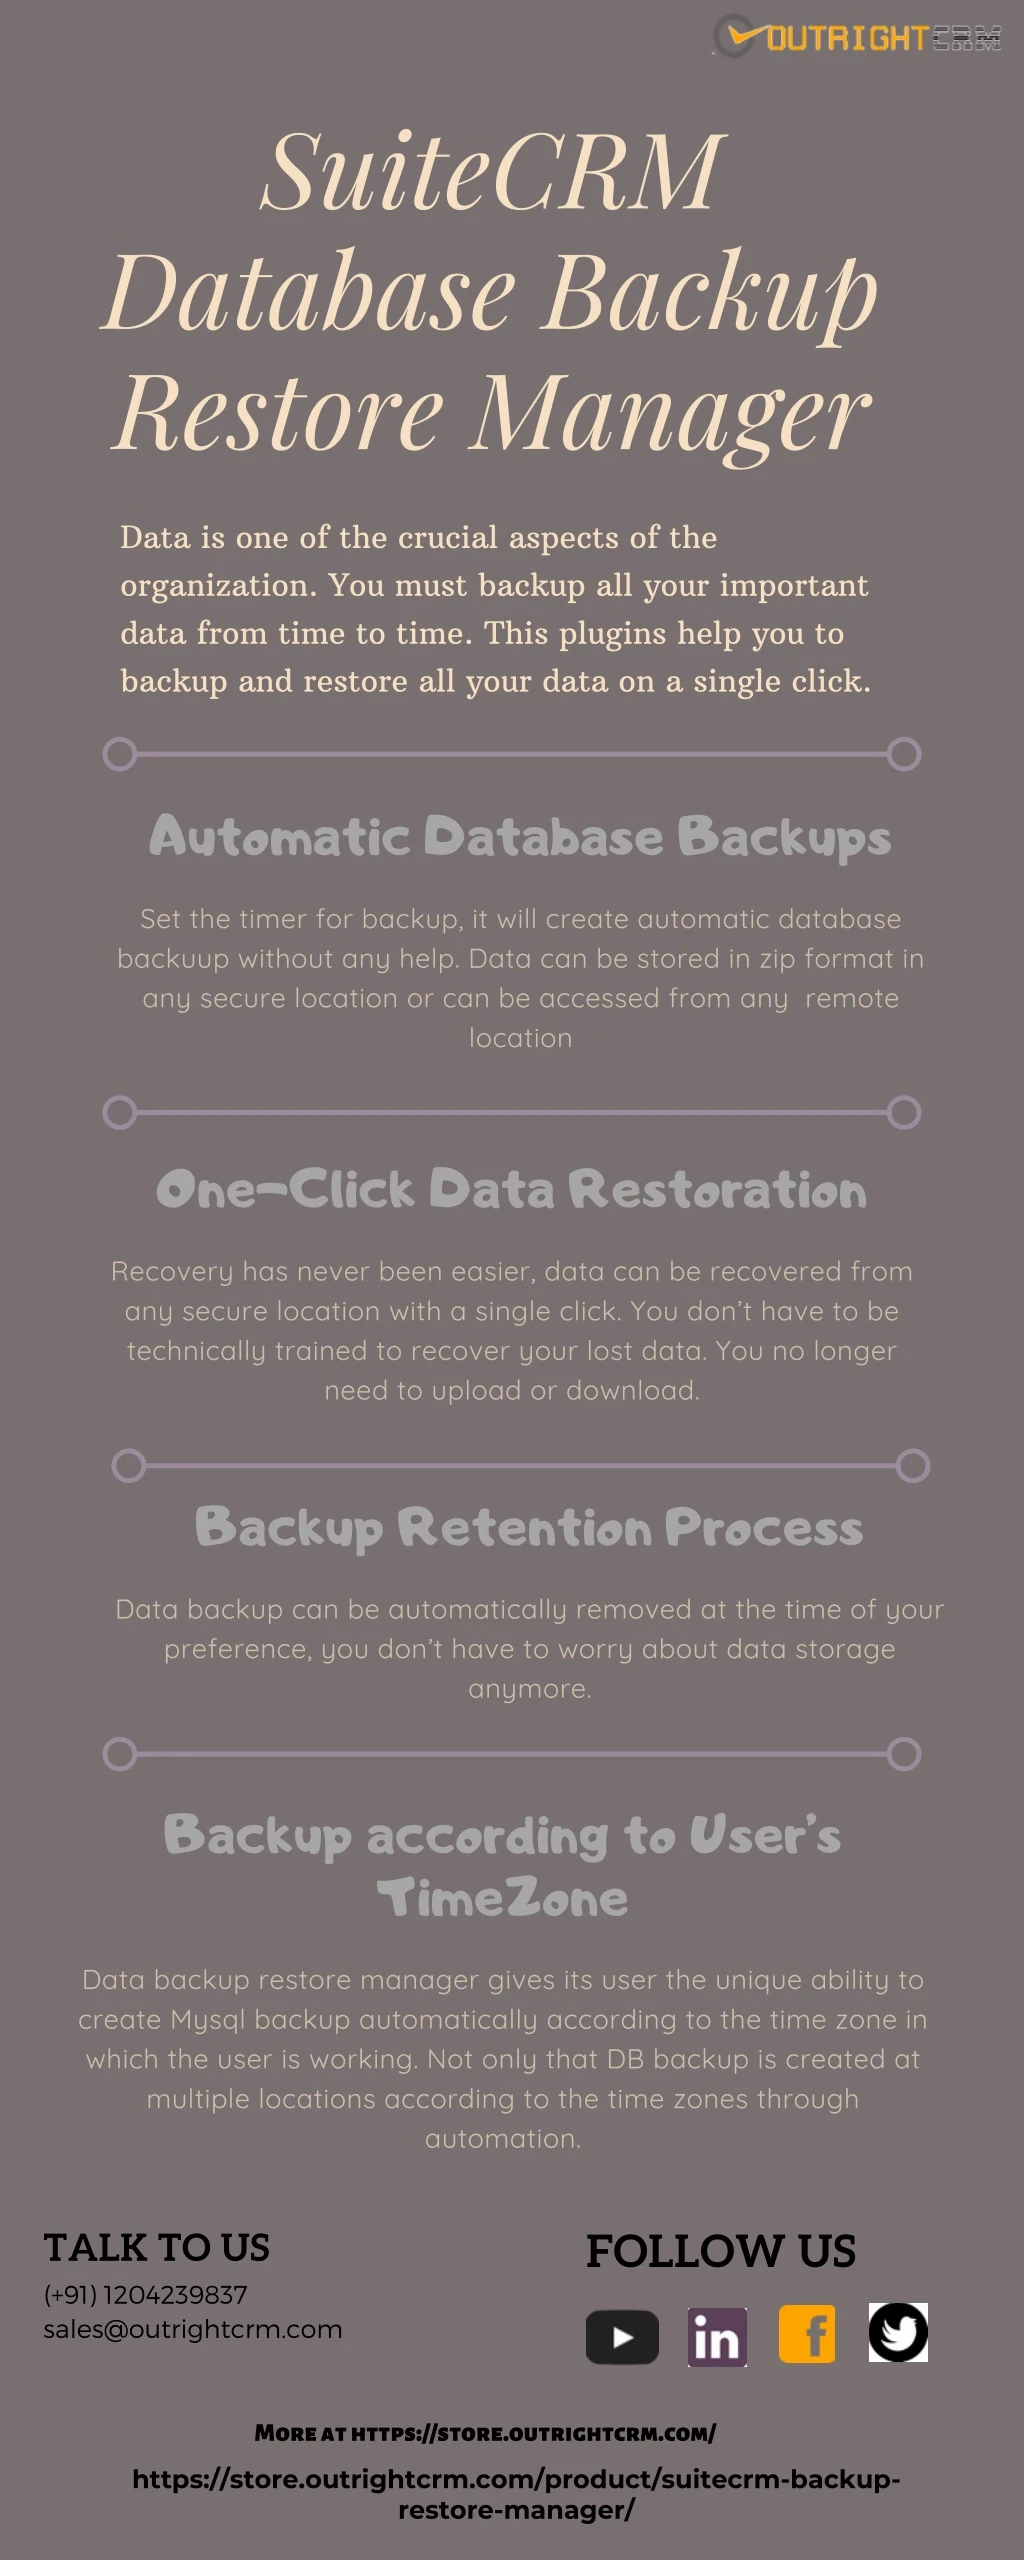 suitecrm database backup restore manager